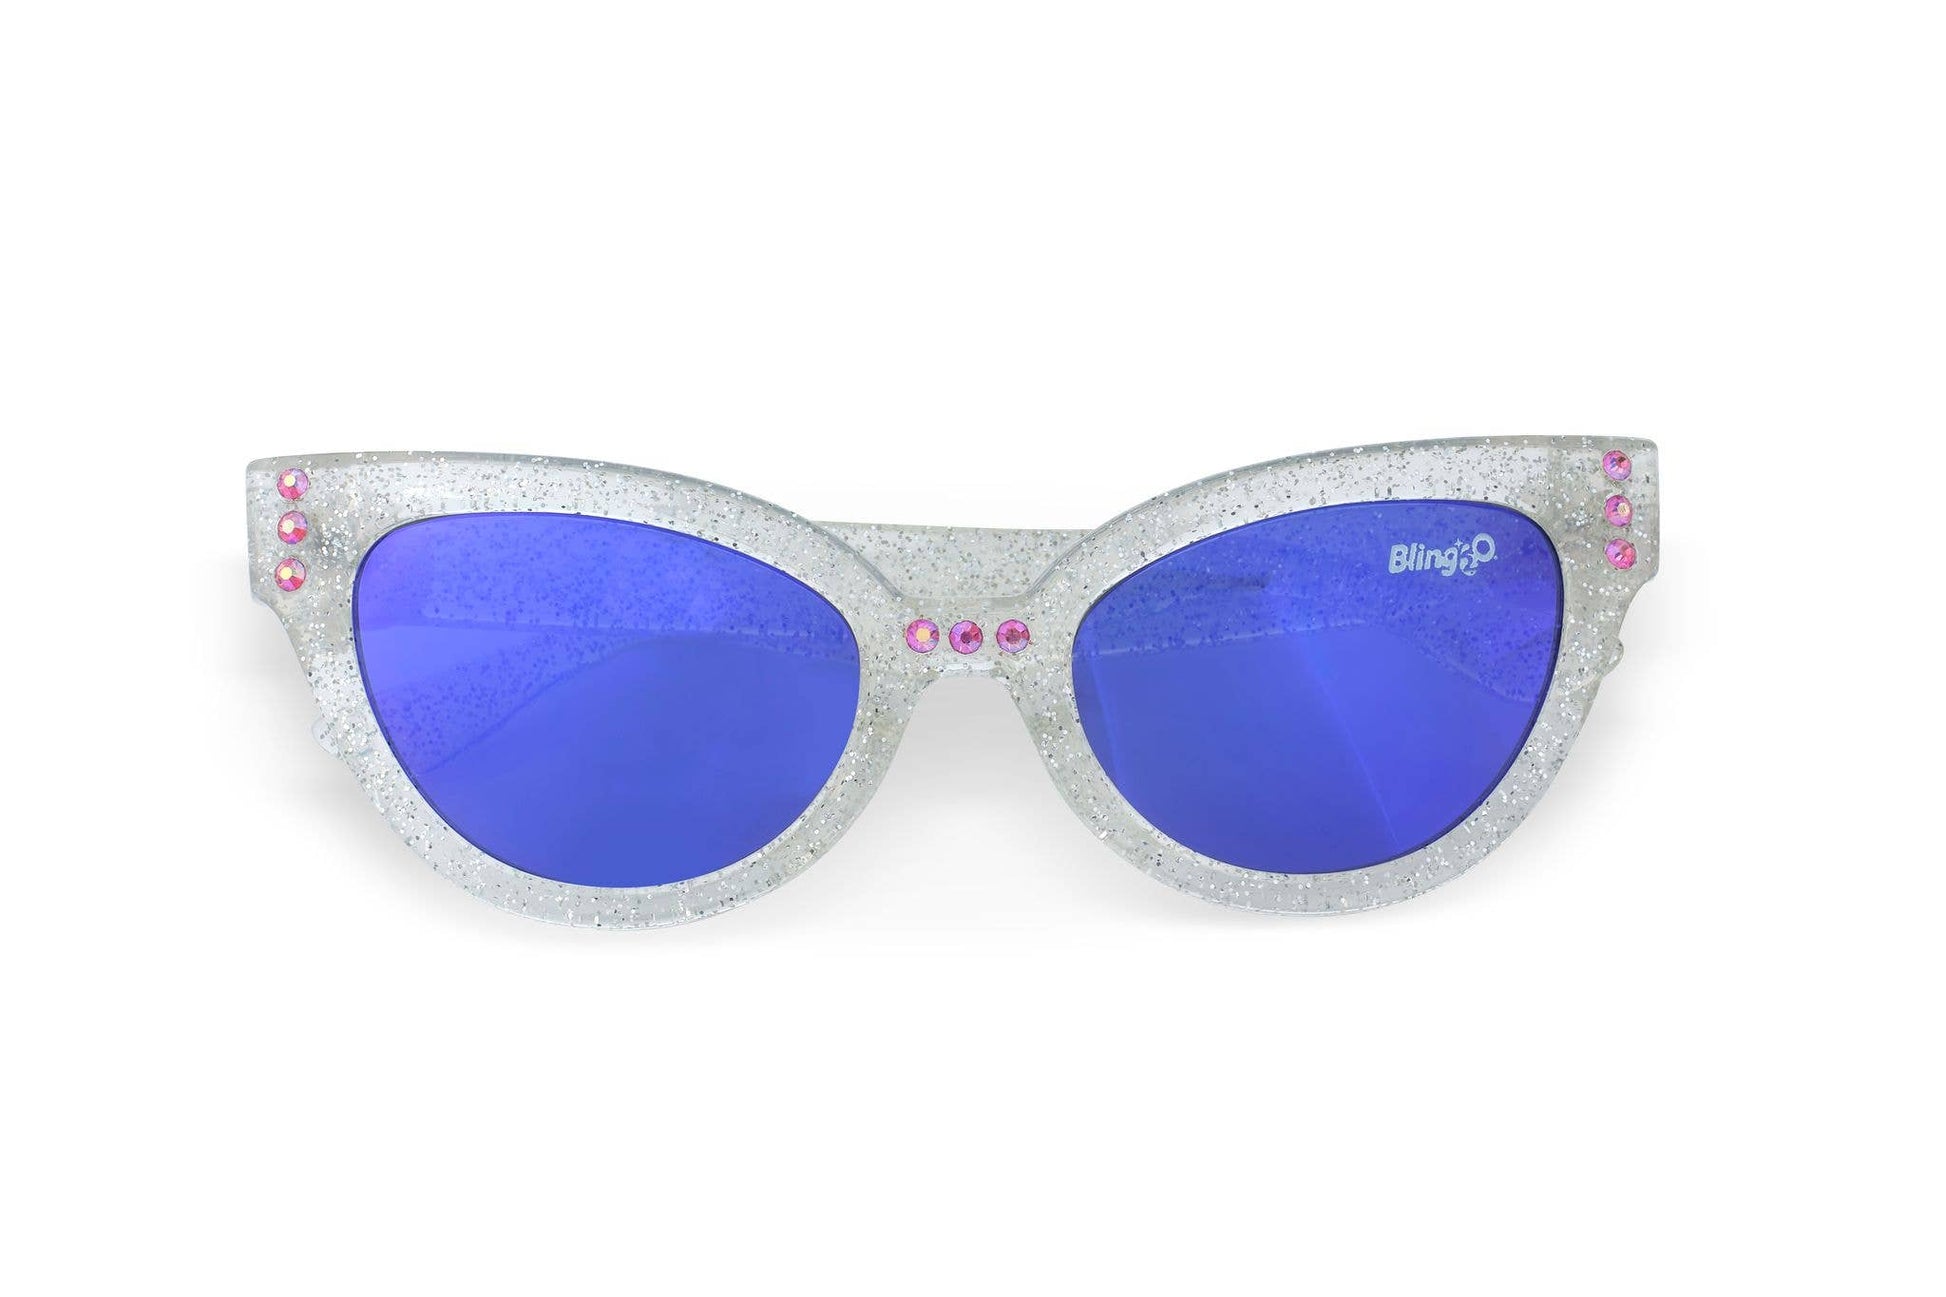 Malibu Beach Sparkle Kids Sunglasses, Beach, Summer - Something about Sofia